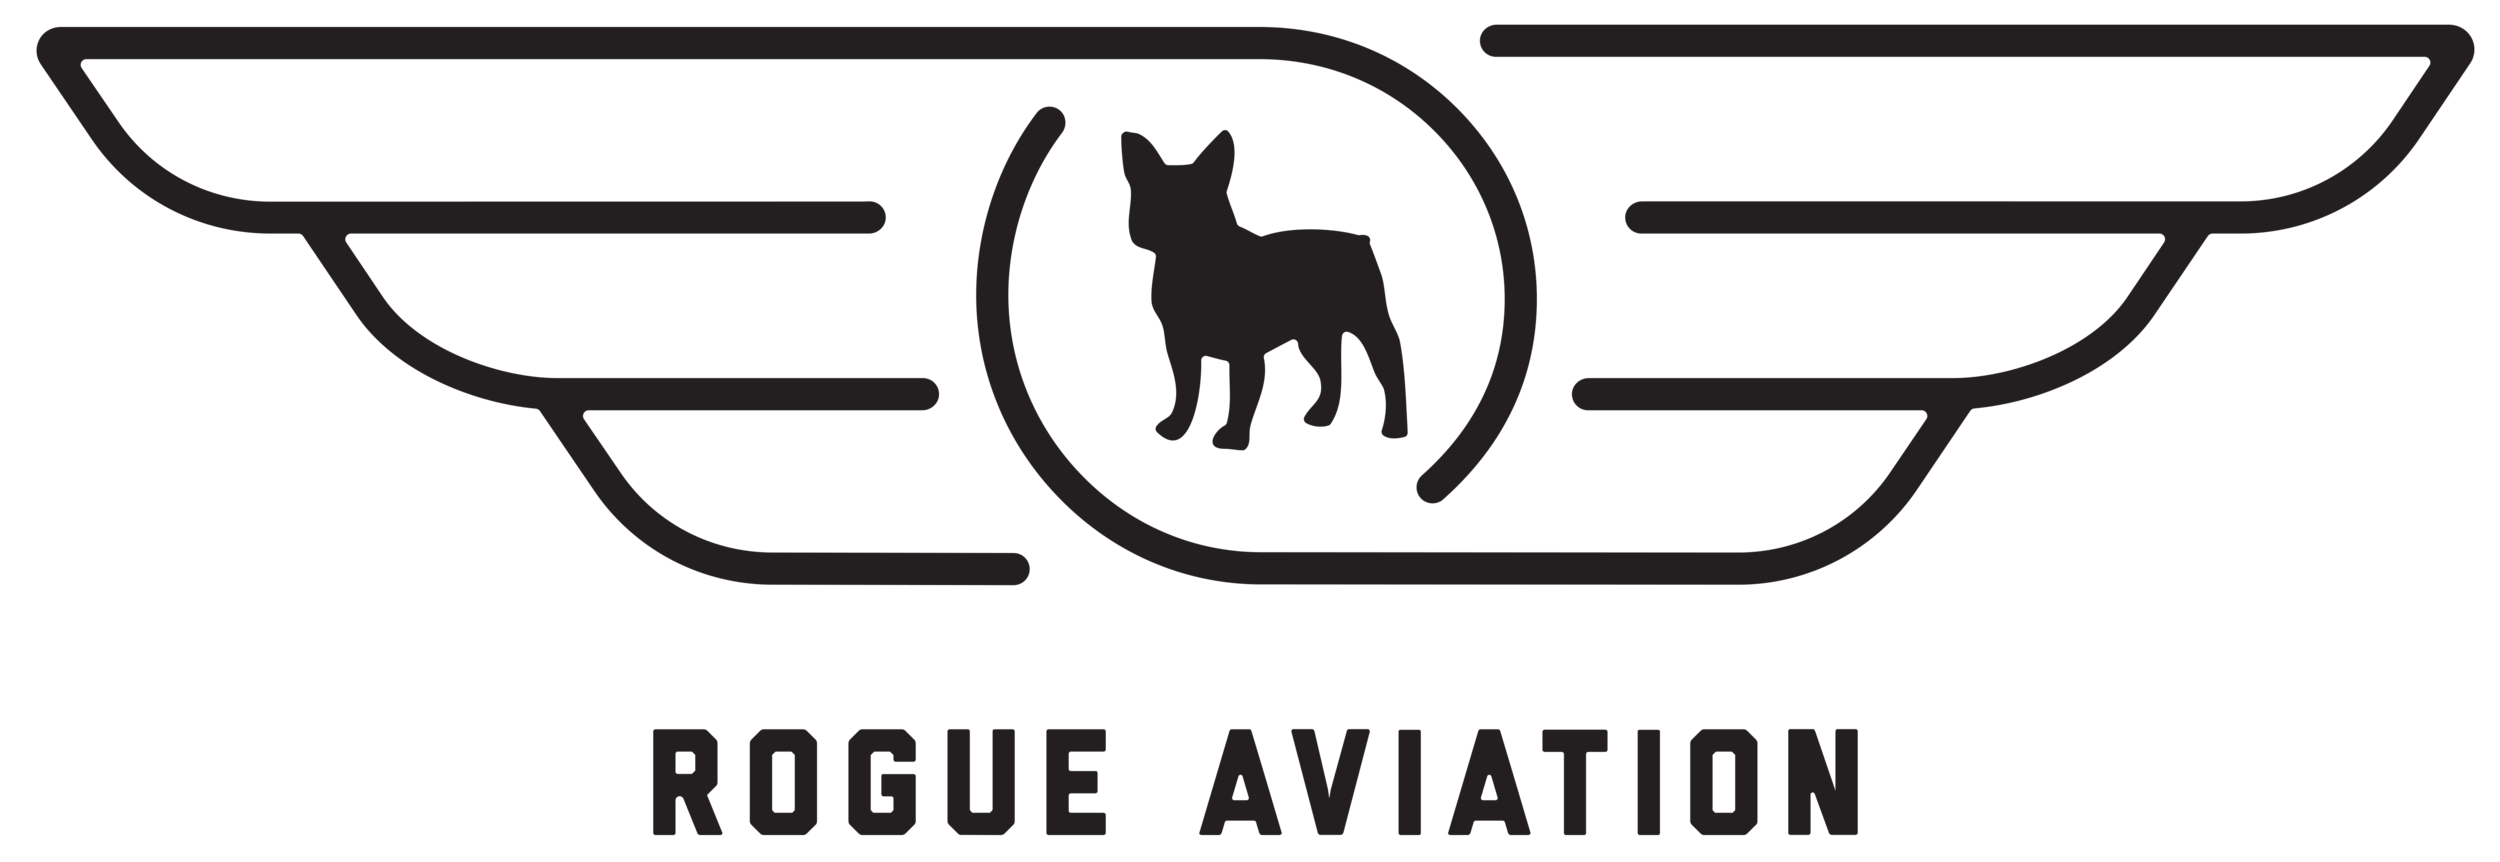 Rogue_Aviation Transparent.png